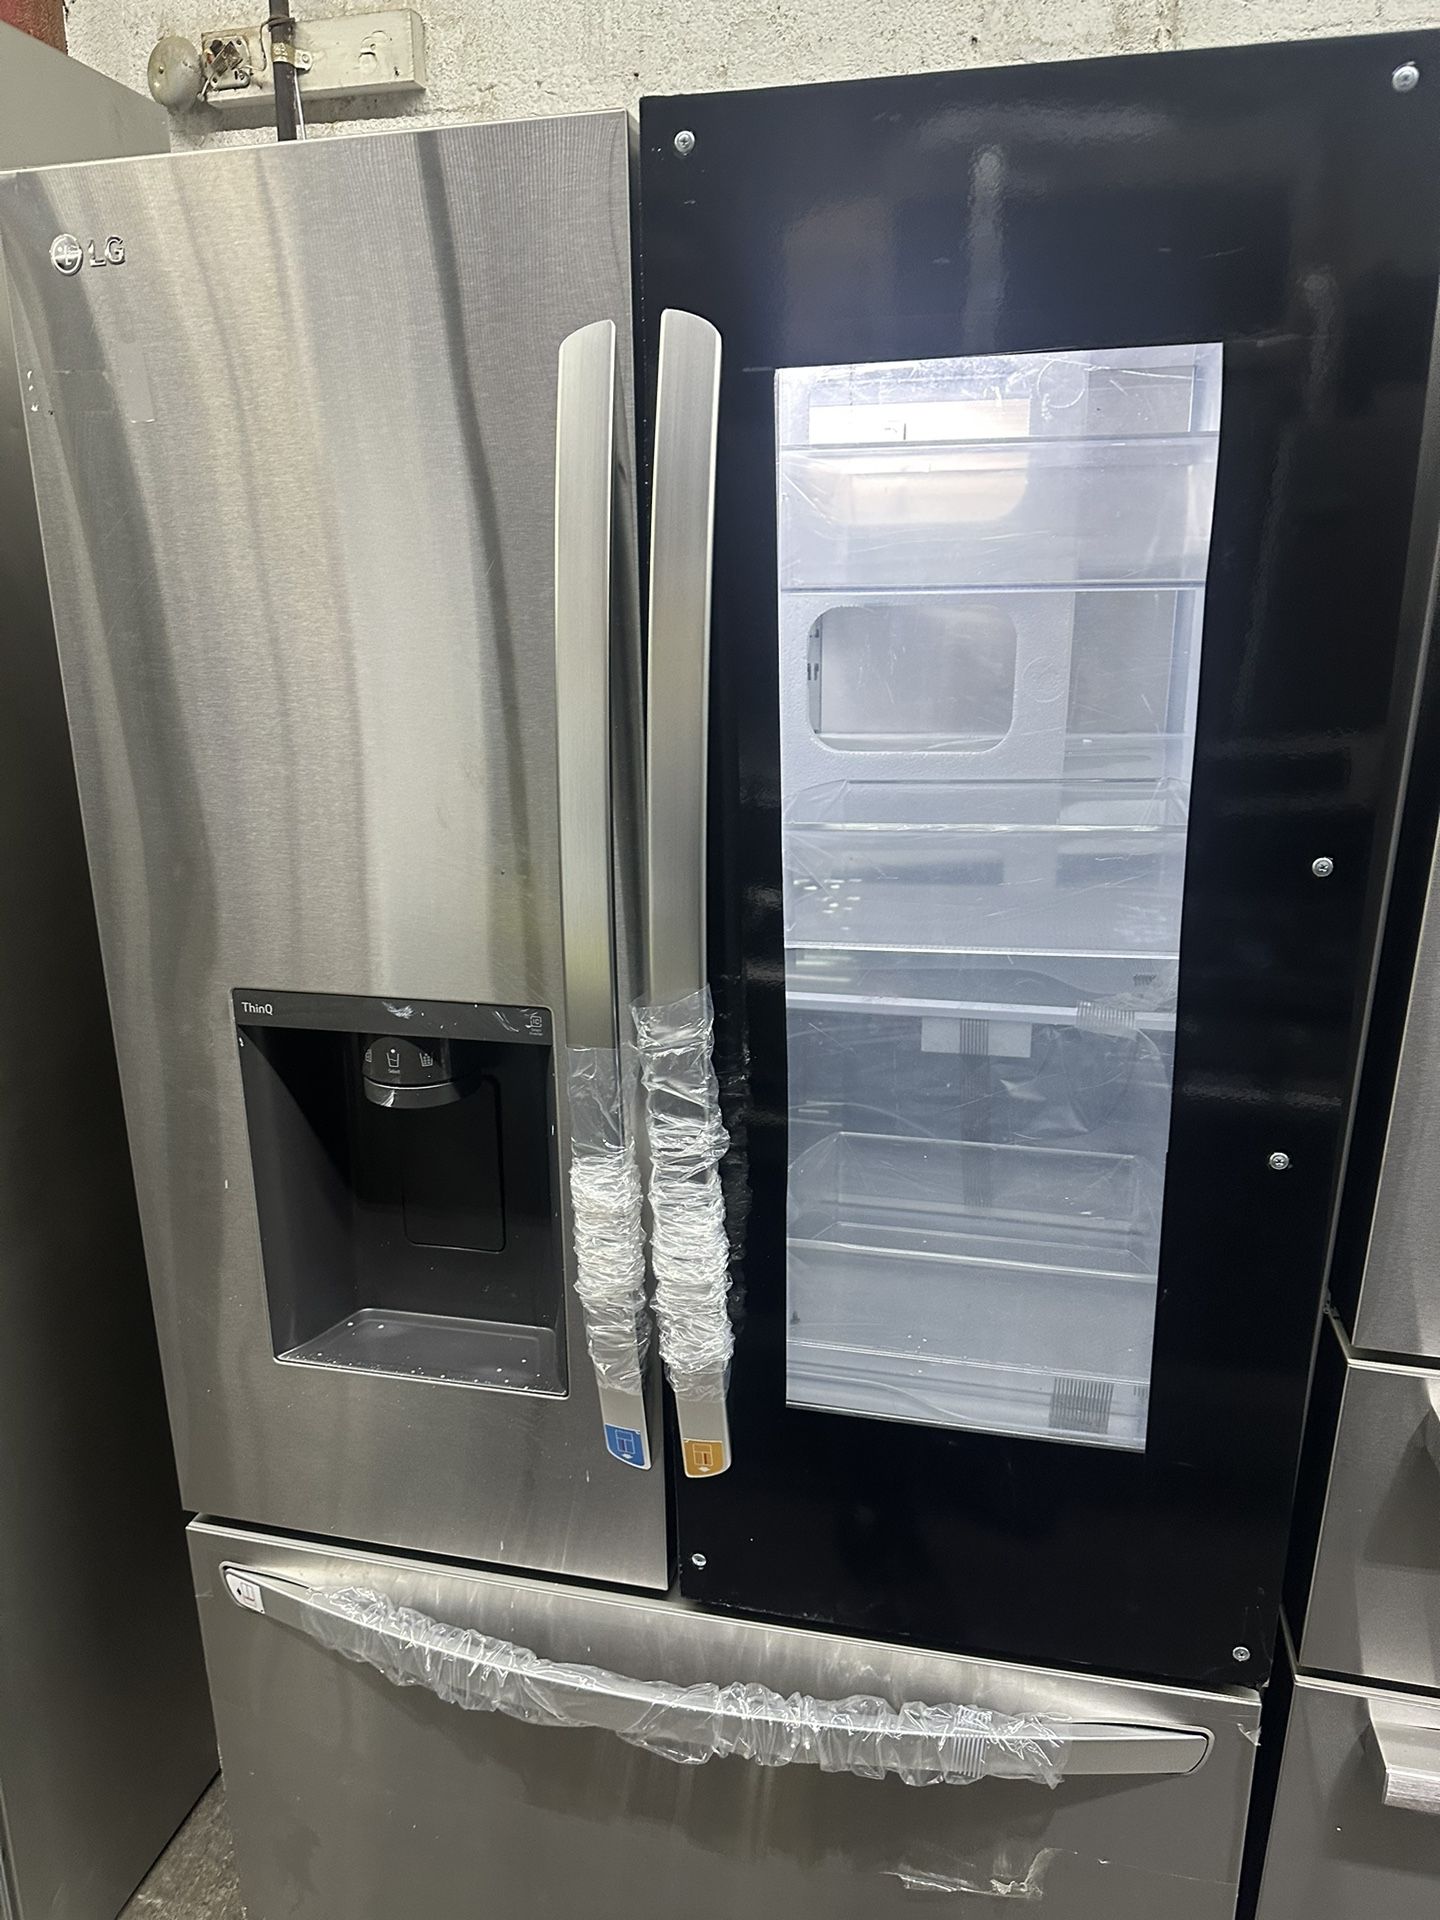 lg refrigerator 36 inches counter depth